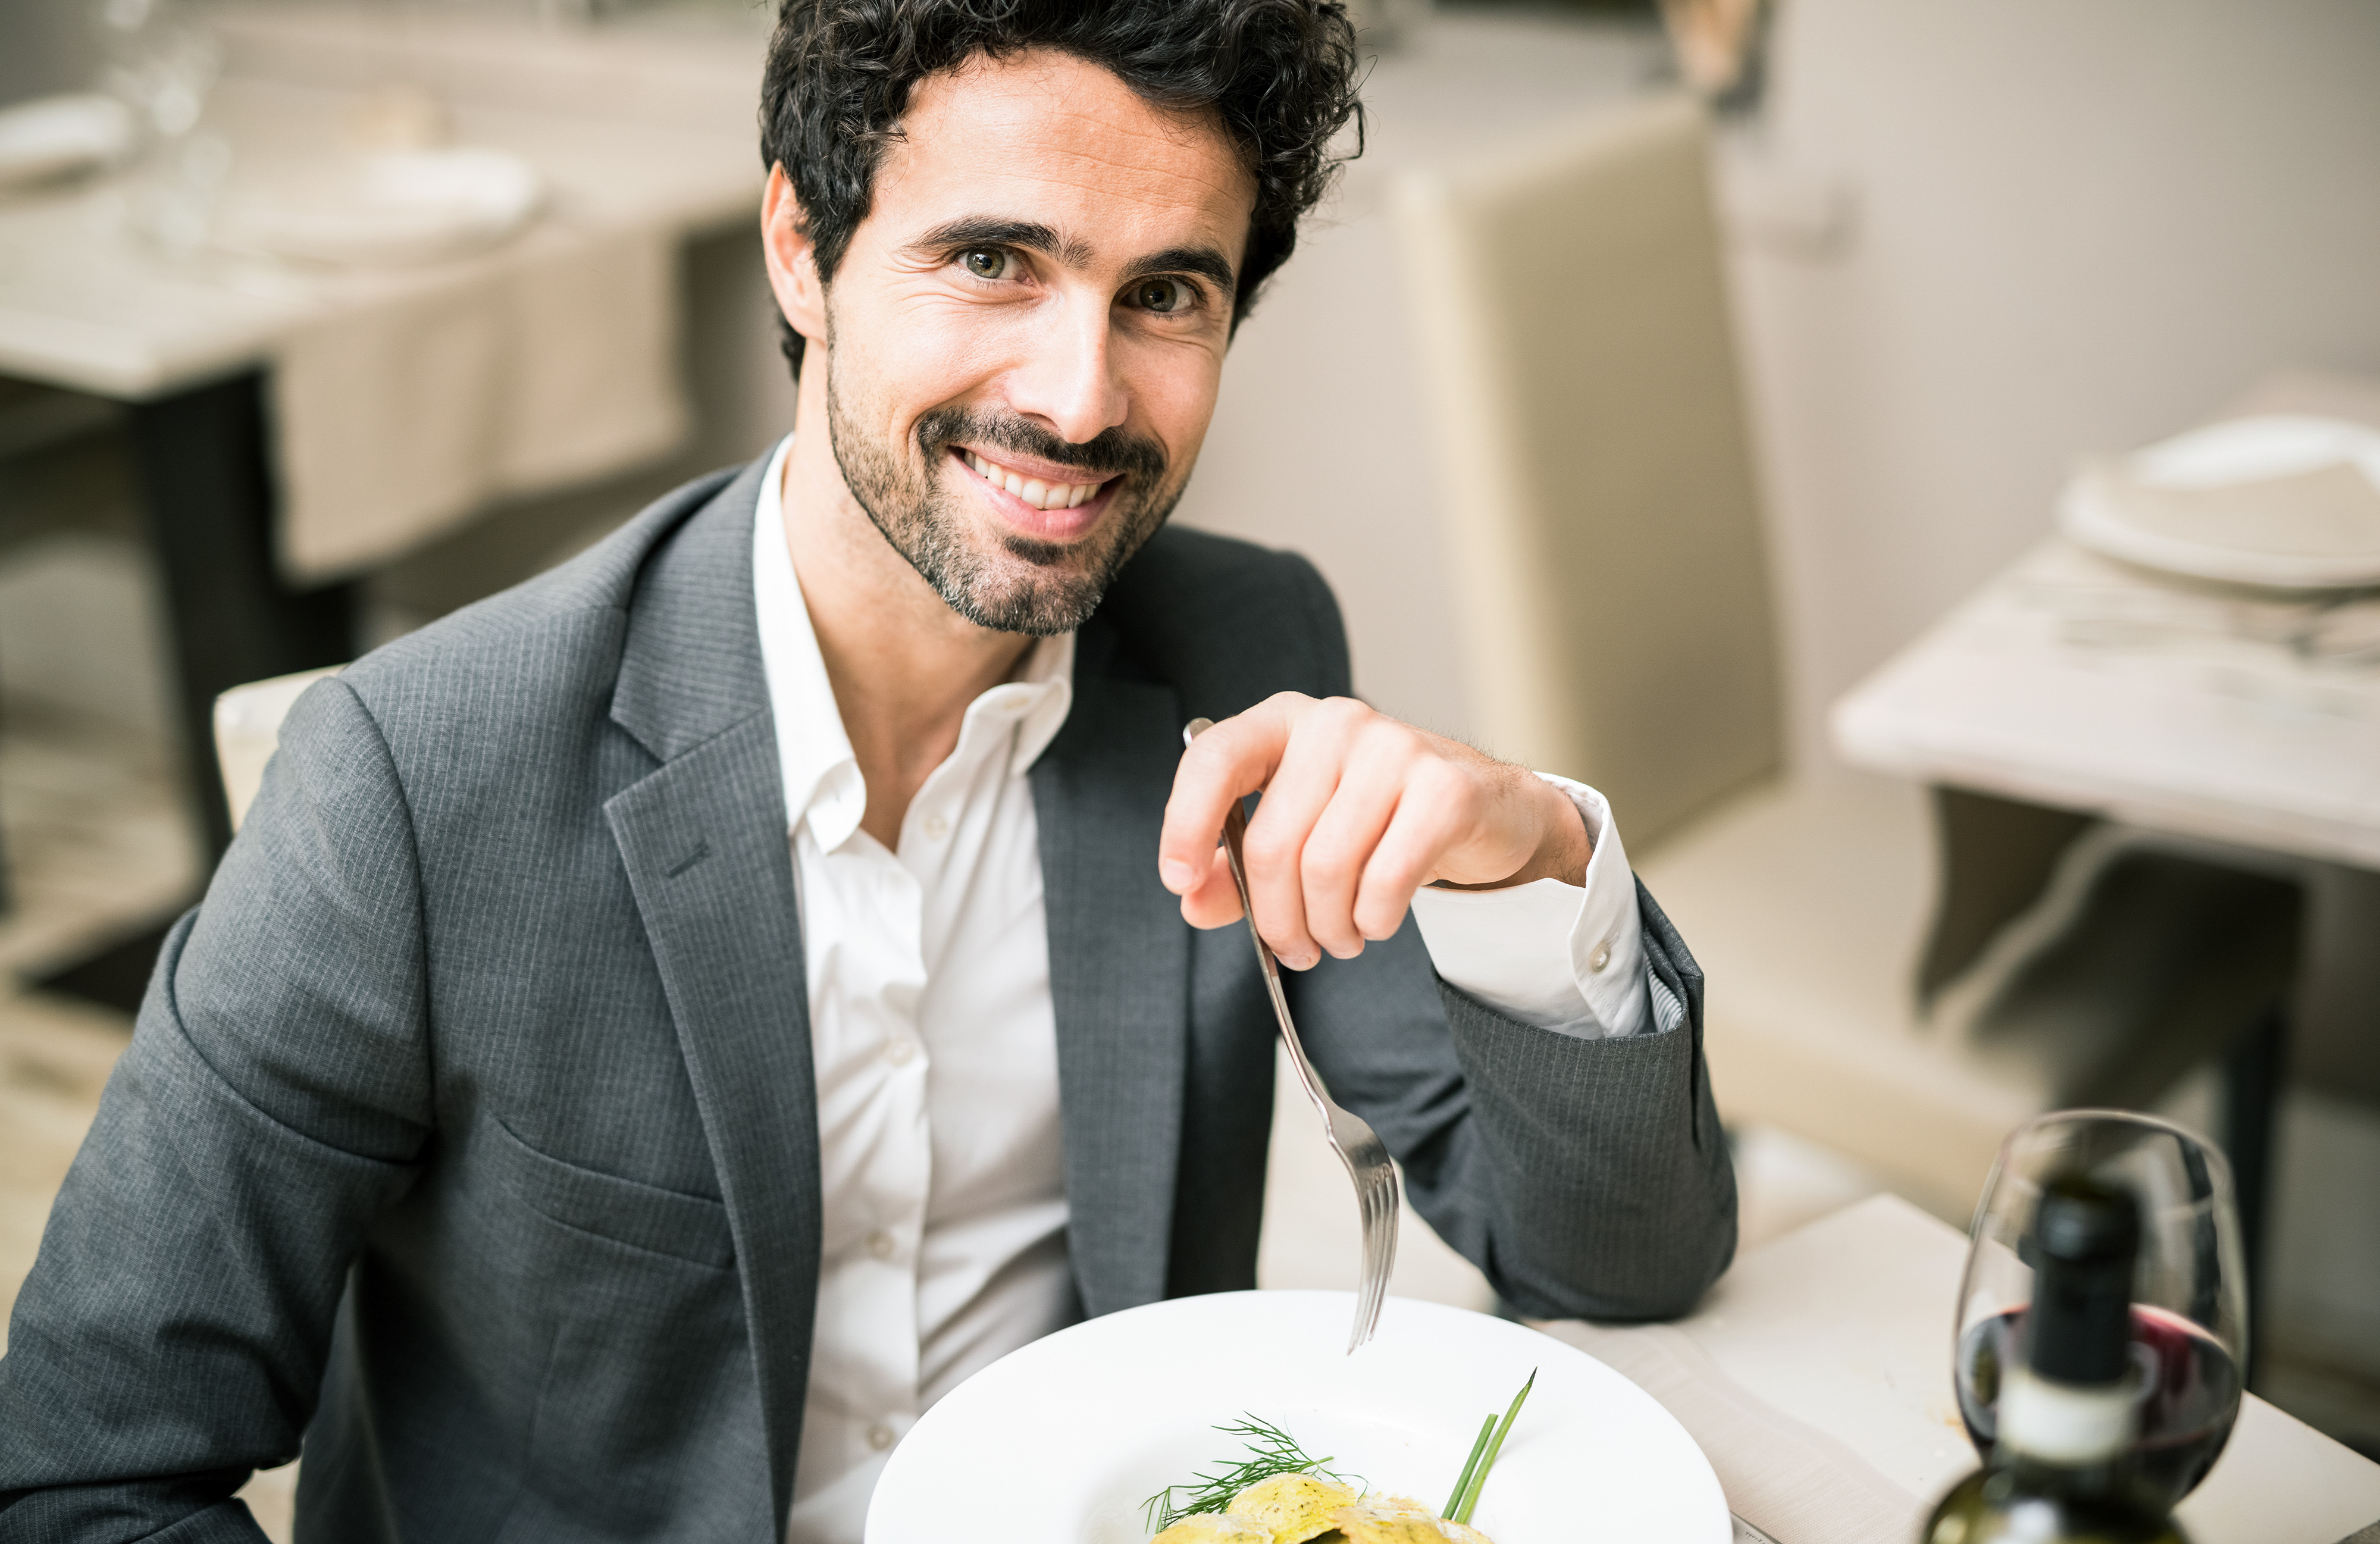 Homme déjeunant dans un restaurant | Source : Shutterstock